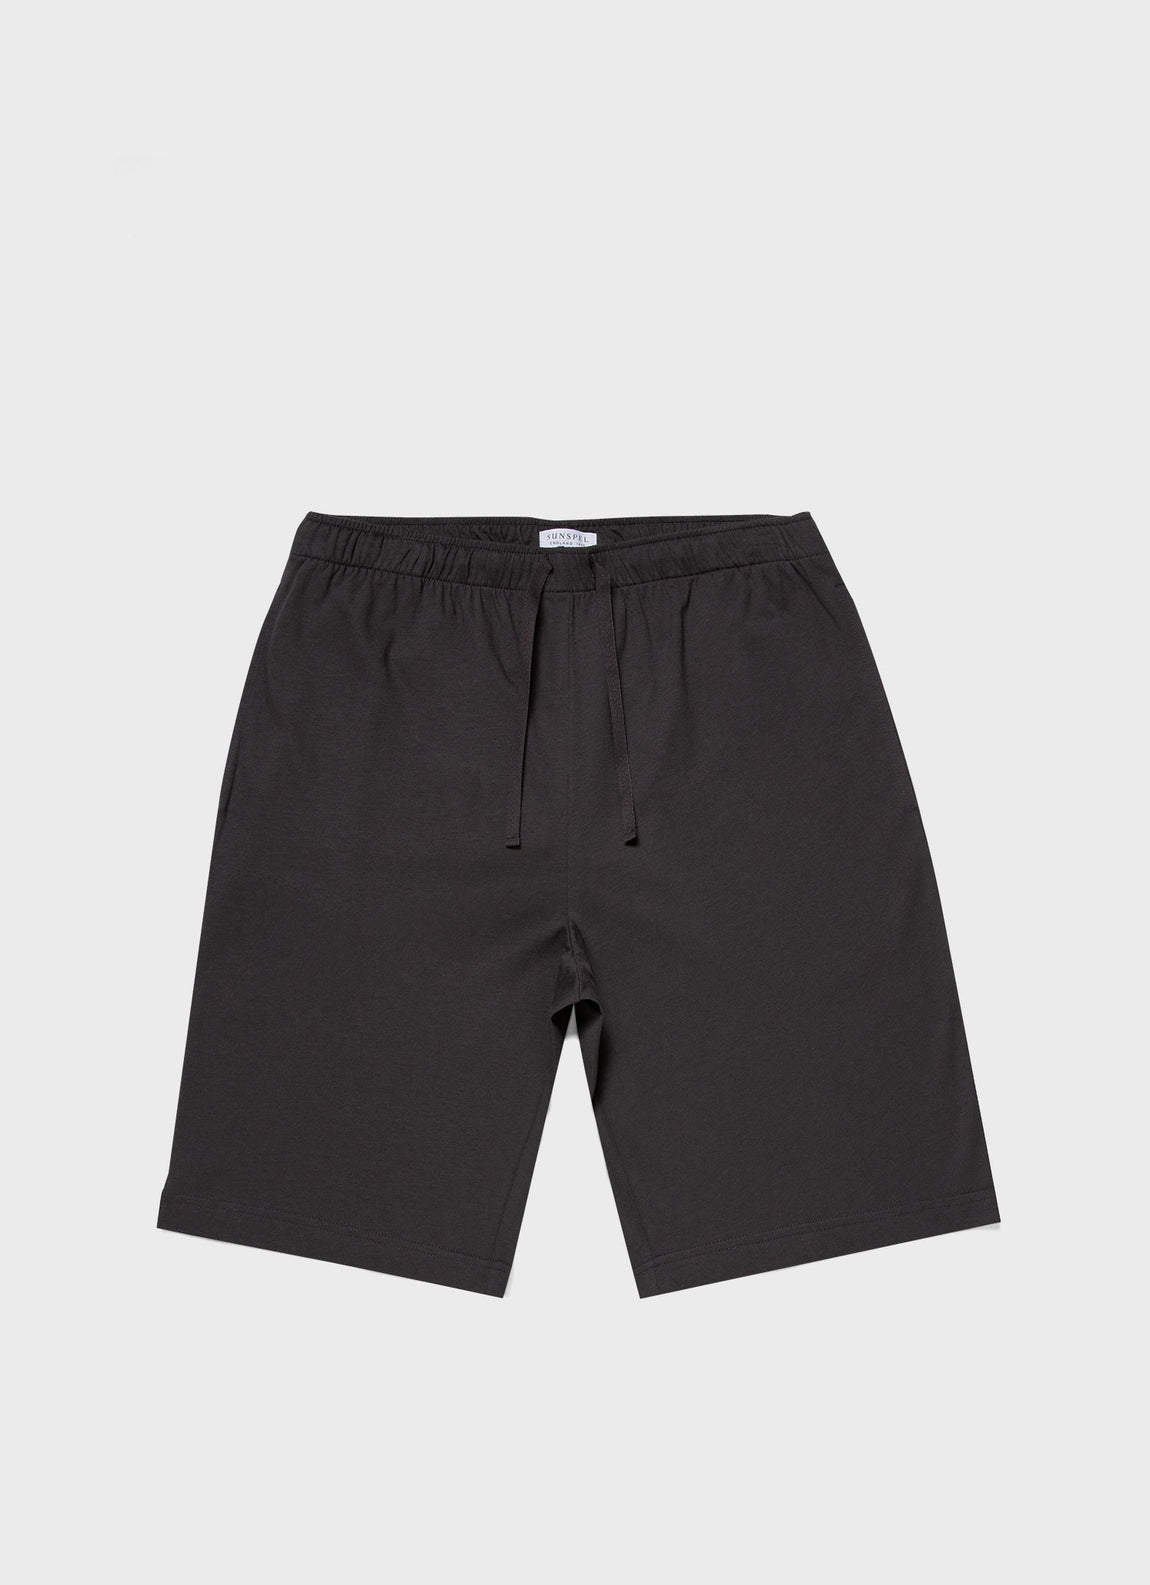 Men's Cotton Modal Lounge Shorts in Charcoal | Sunspel